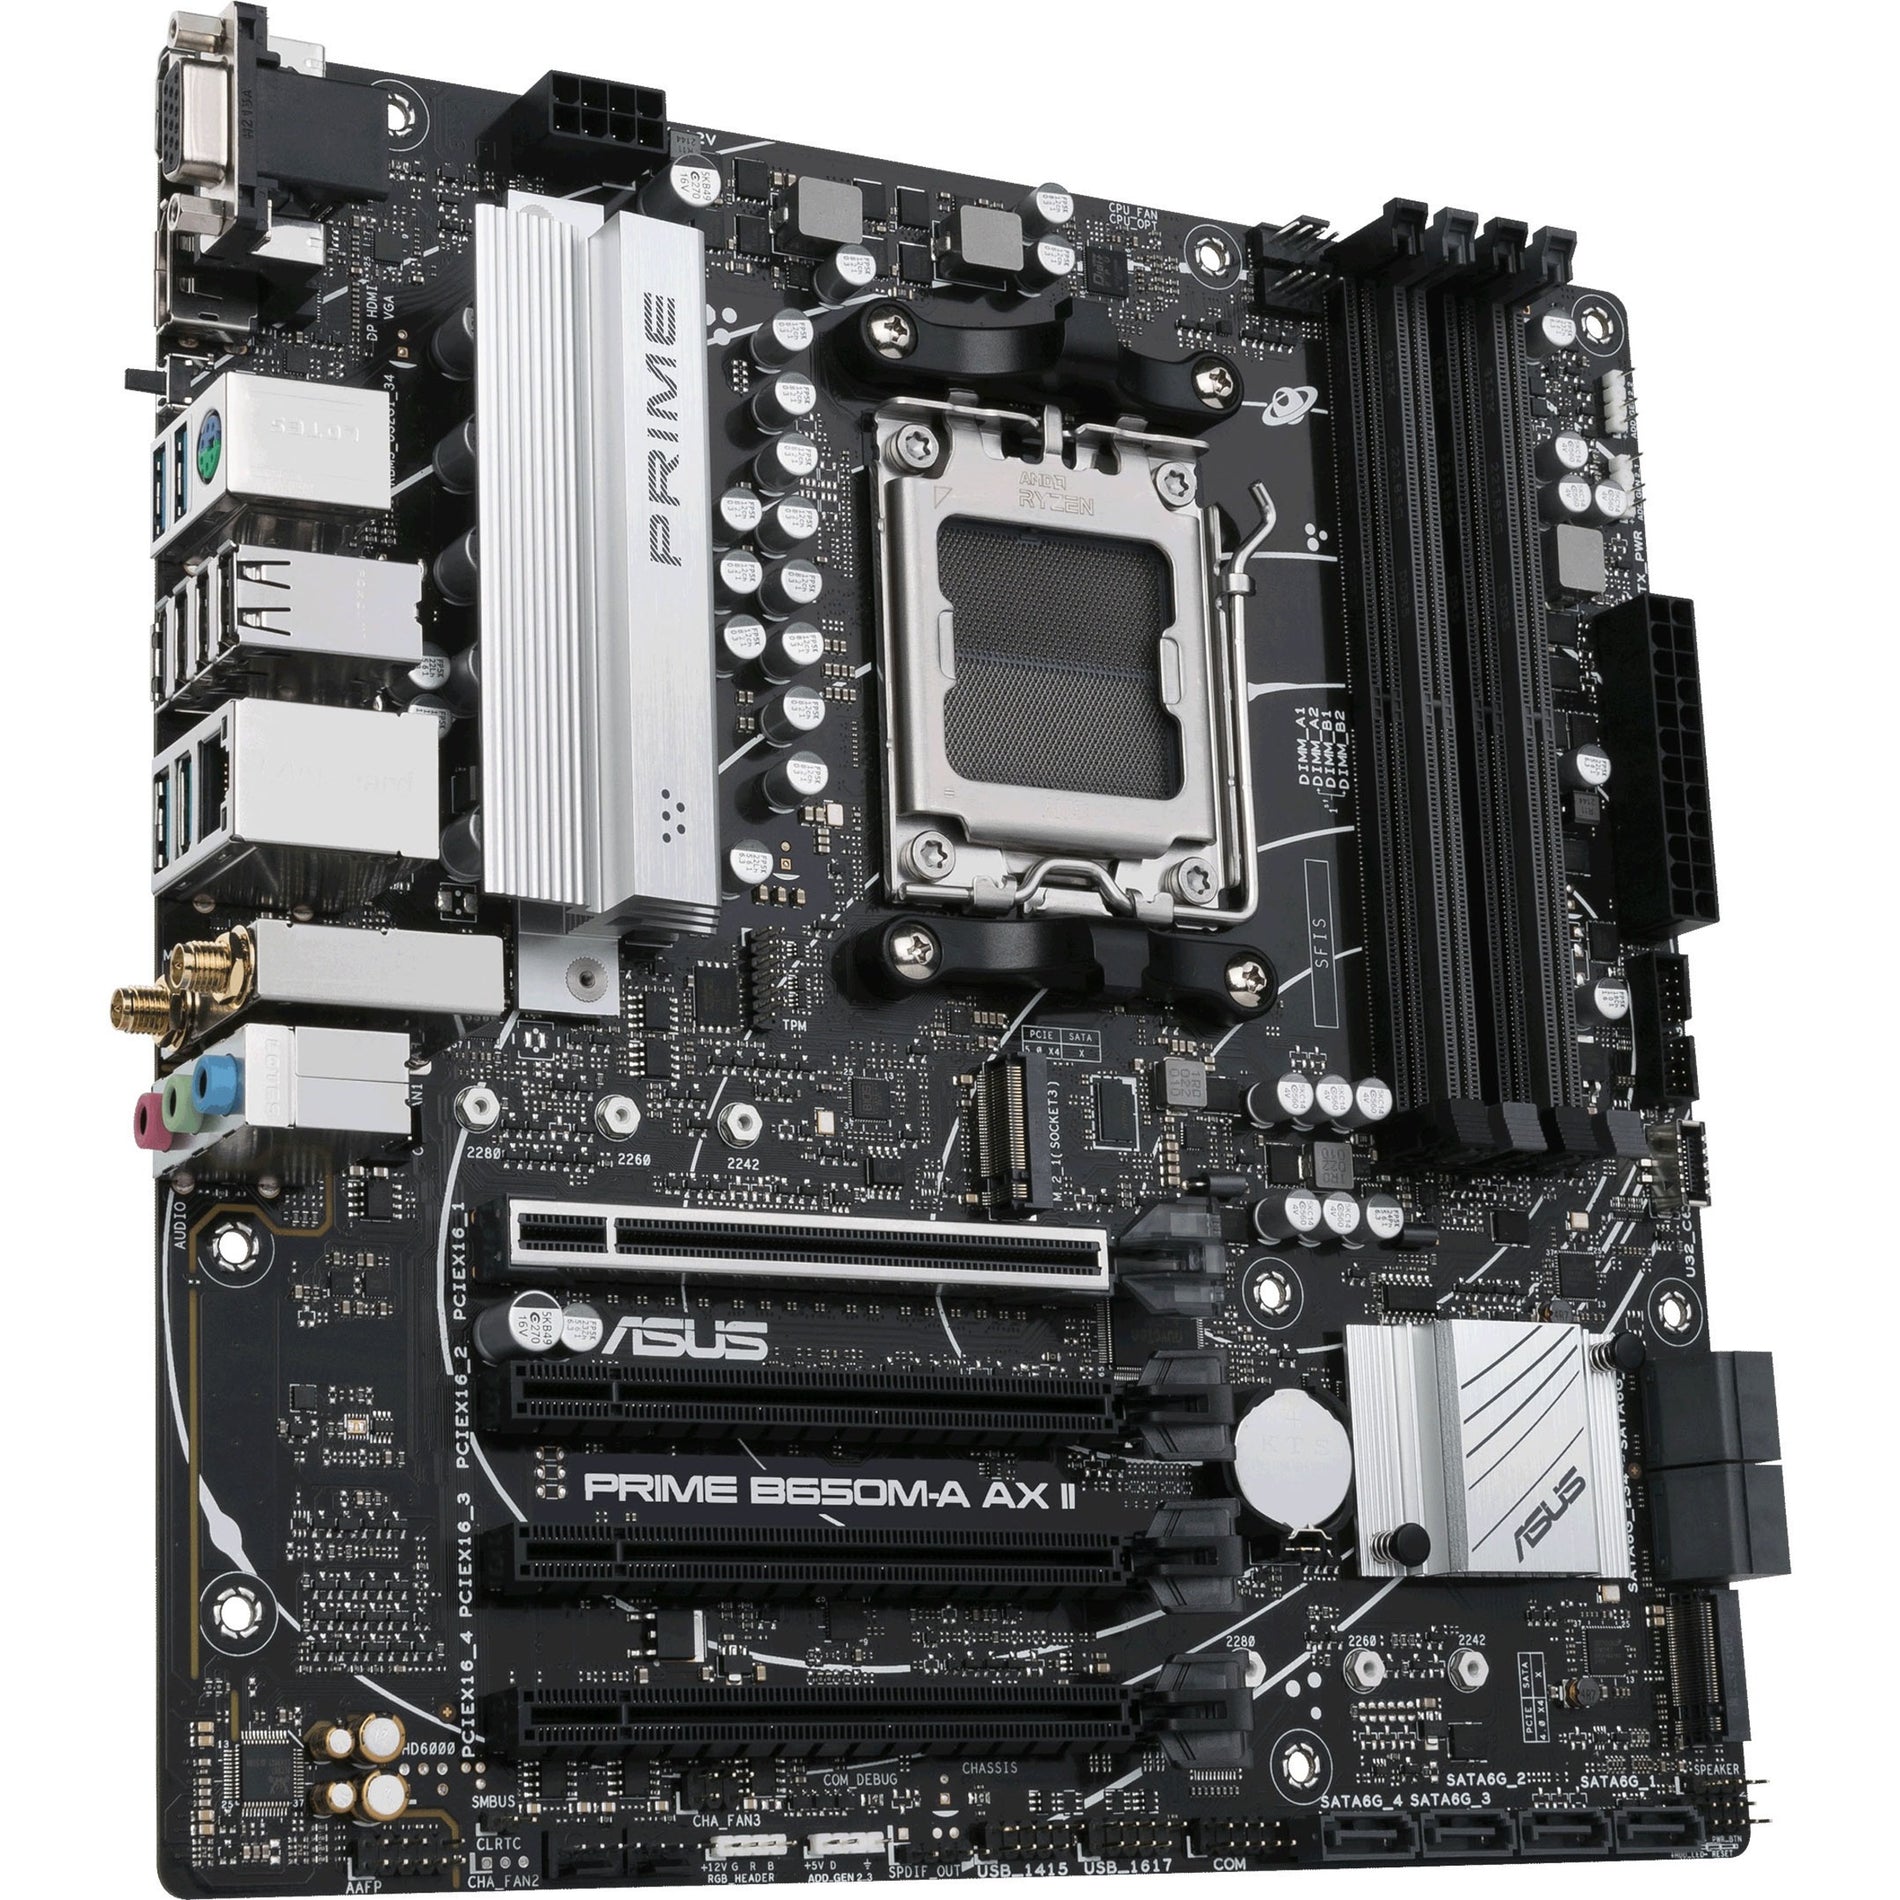 Asus PRIME B650M-A AX II Gaming Desktop Motherboard - AMD B650 Chipset Socket AM5 Micro ATX  Asus PRIME B650M-A AX II Gaming Desktop Motherboard - AMD B650 Chipsatz Steckplatz AM5 Micro ATX